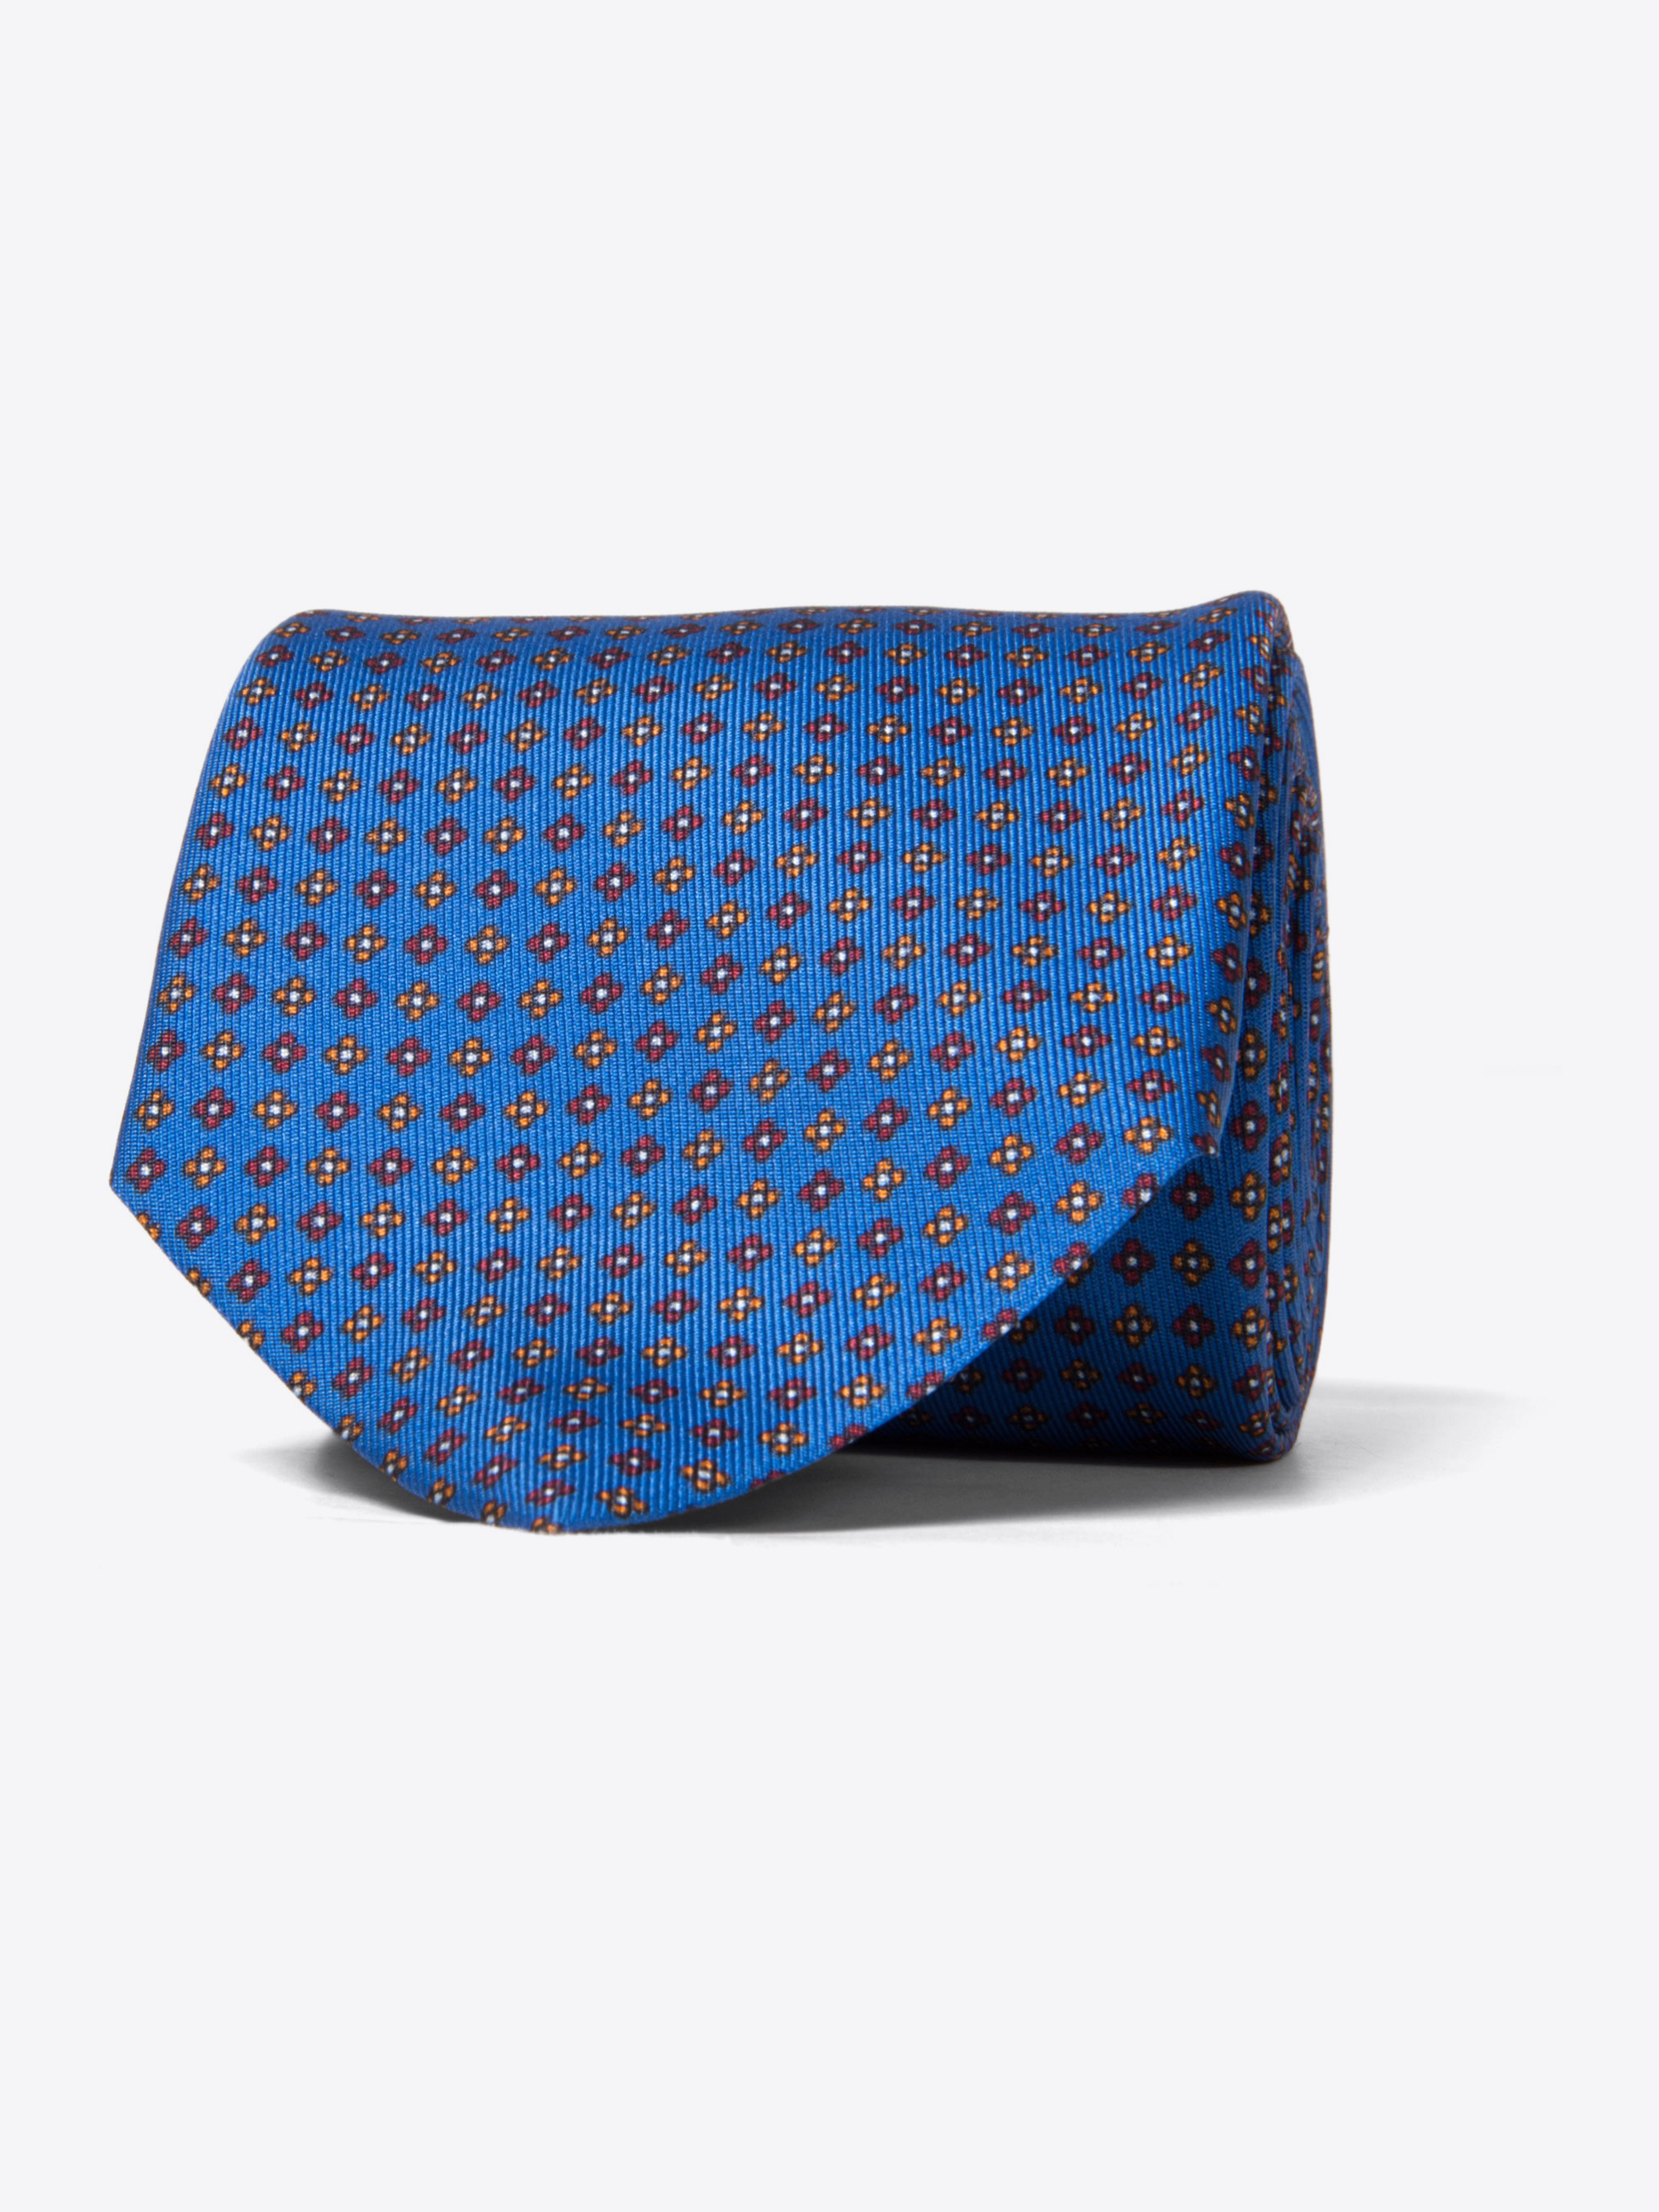 Zoom Image of Lombardia Blue Print Tie